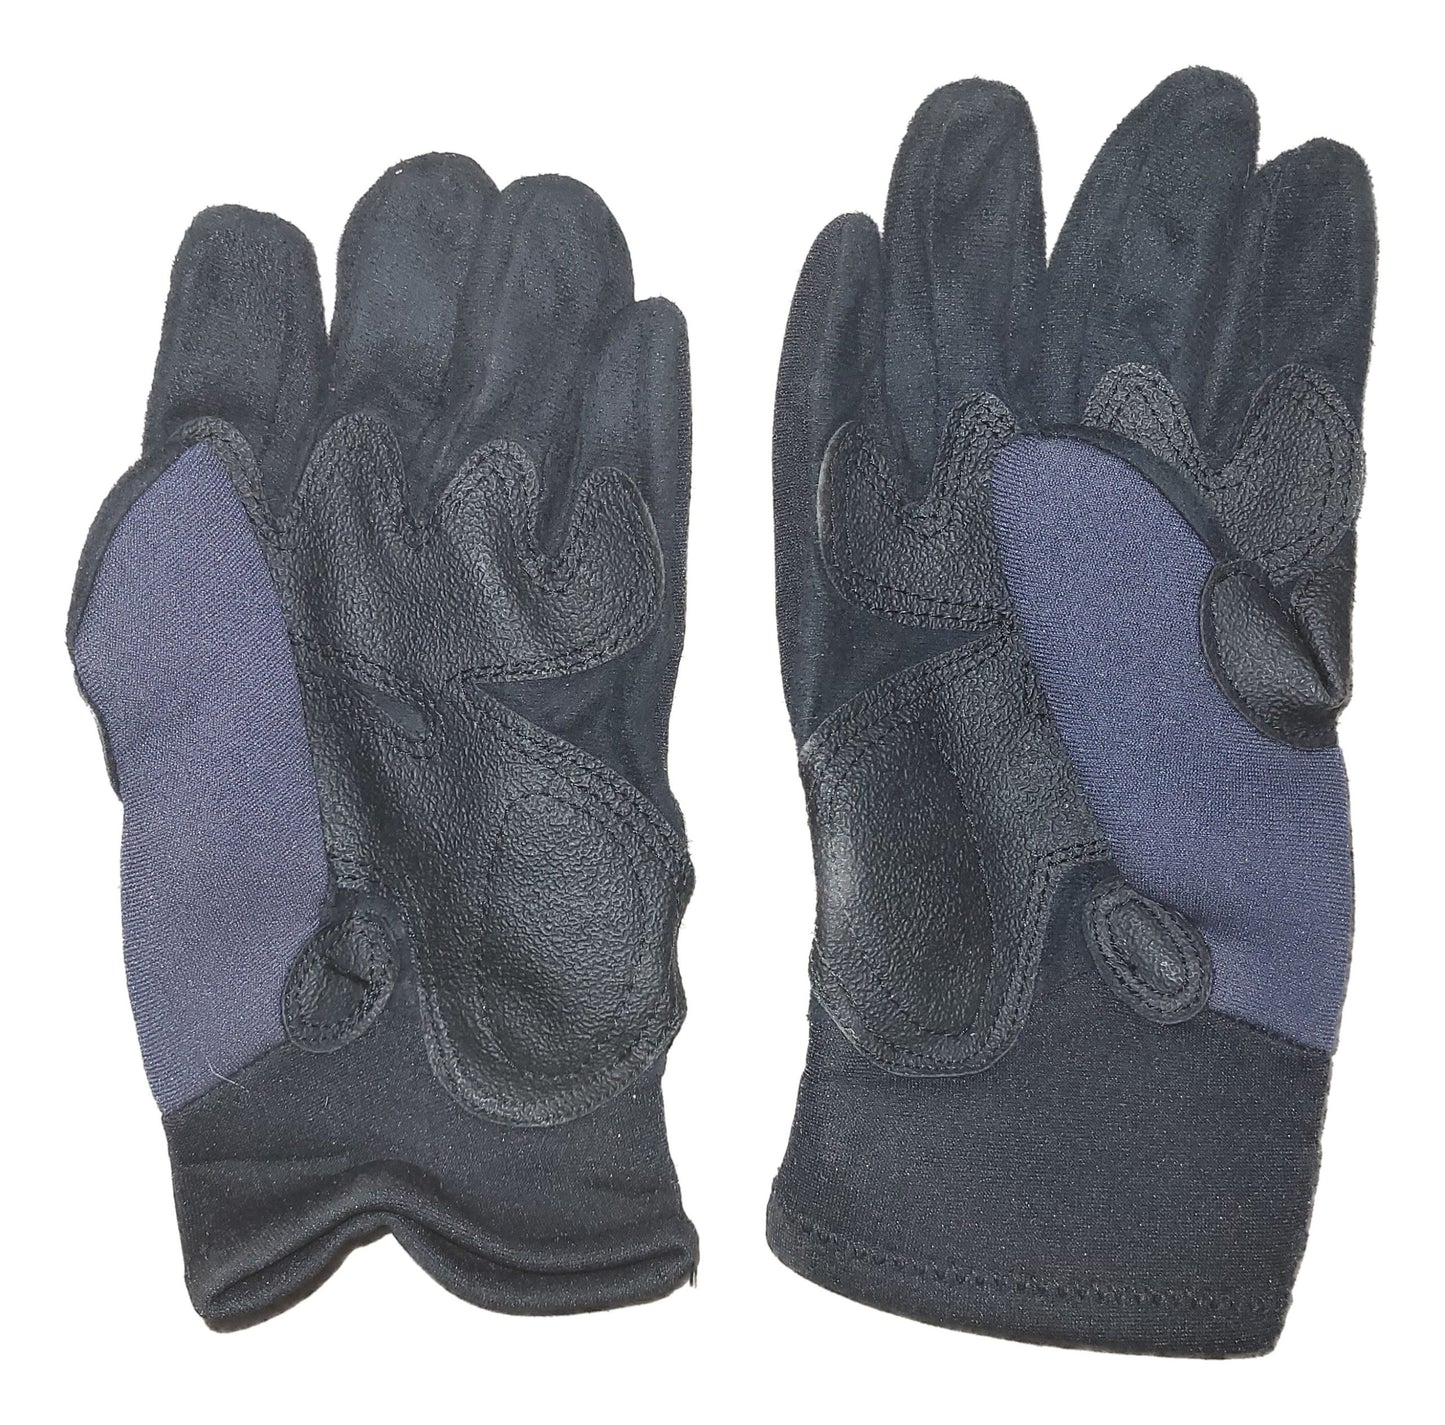 NeoSport 2mm Dive Gloves "XS"